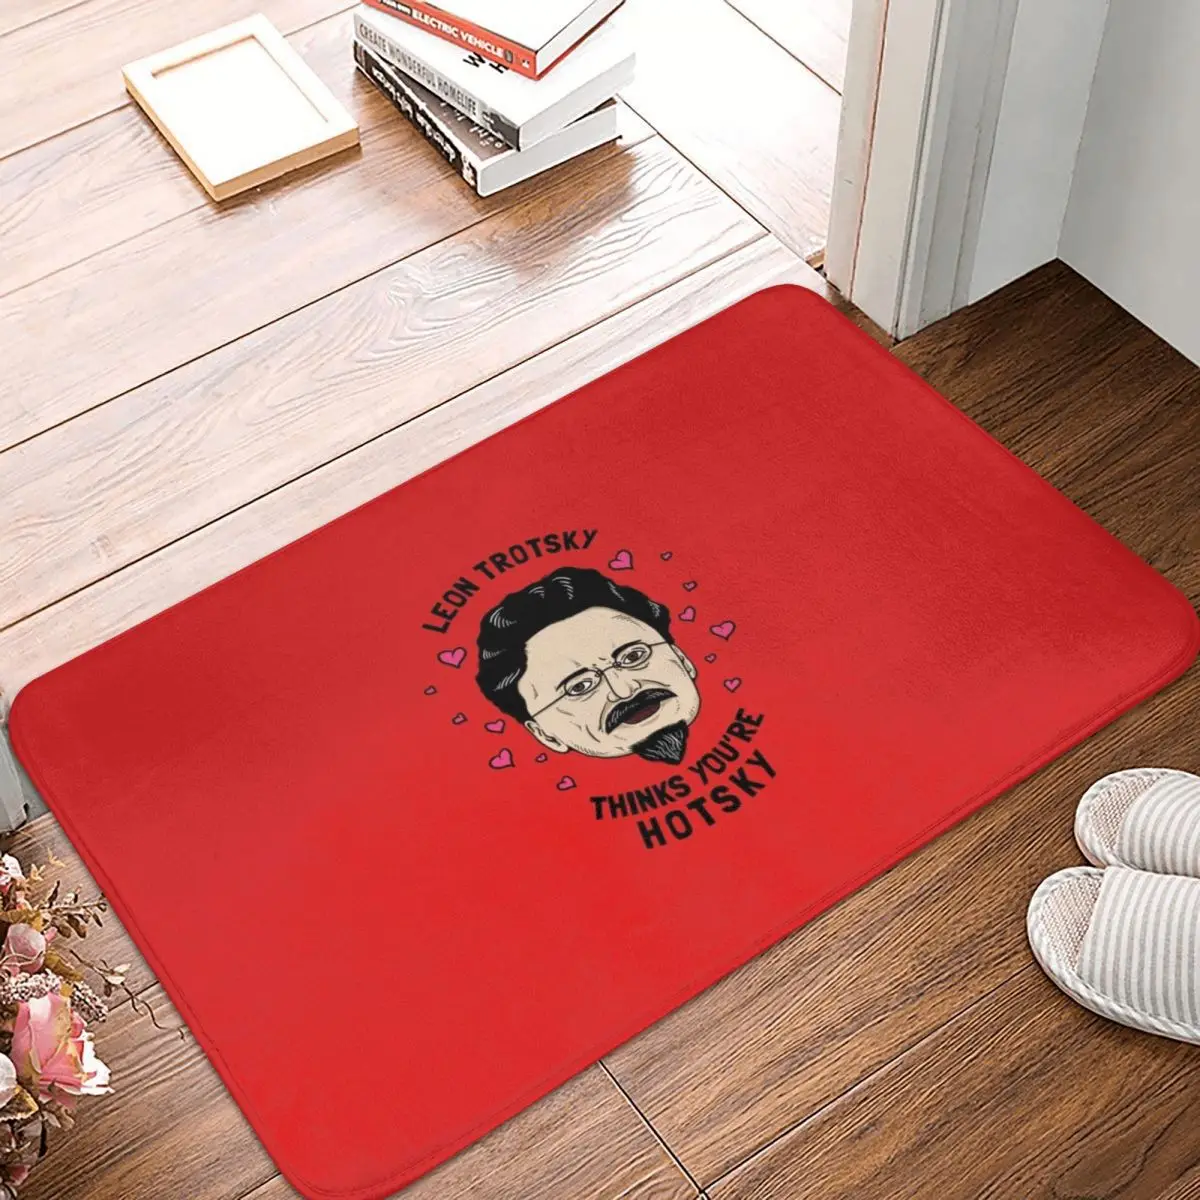 

Leon Trotsky Thinks You're Hotsky Doormat Carpet Mat Rug Polyester PVC Non-Slip Floor Decor Bath Bathroom Kitchen Balcony 40x60